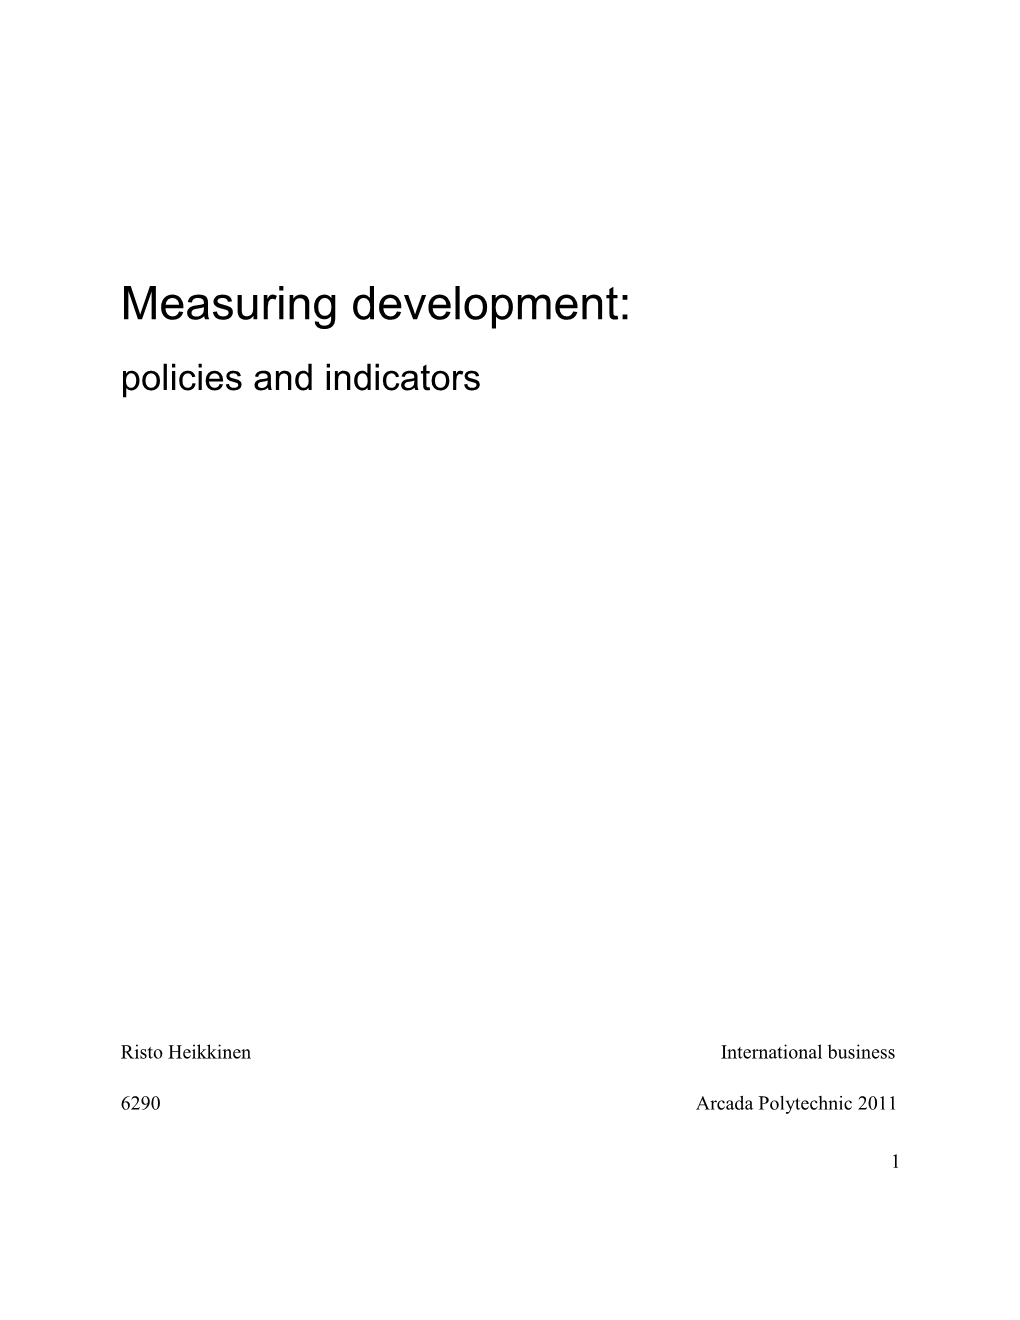 Measuring Development: Policies and Indicators